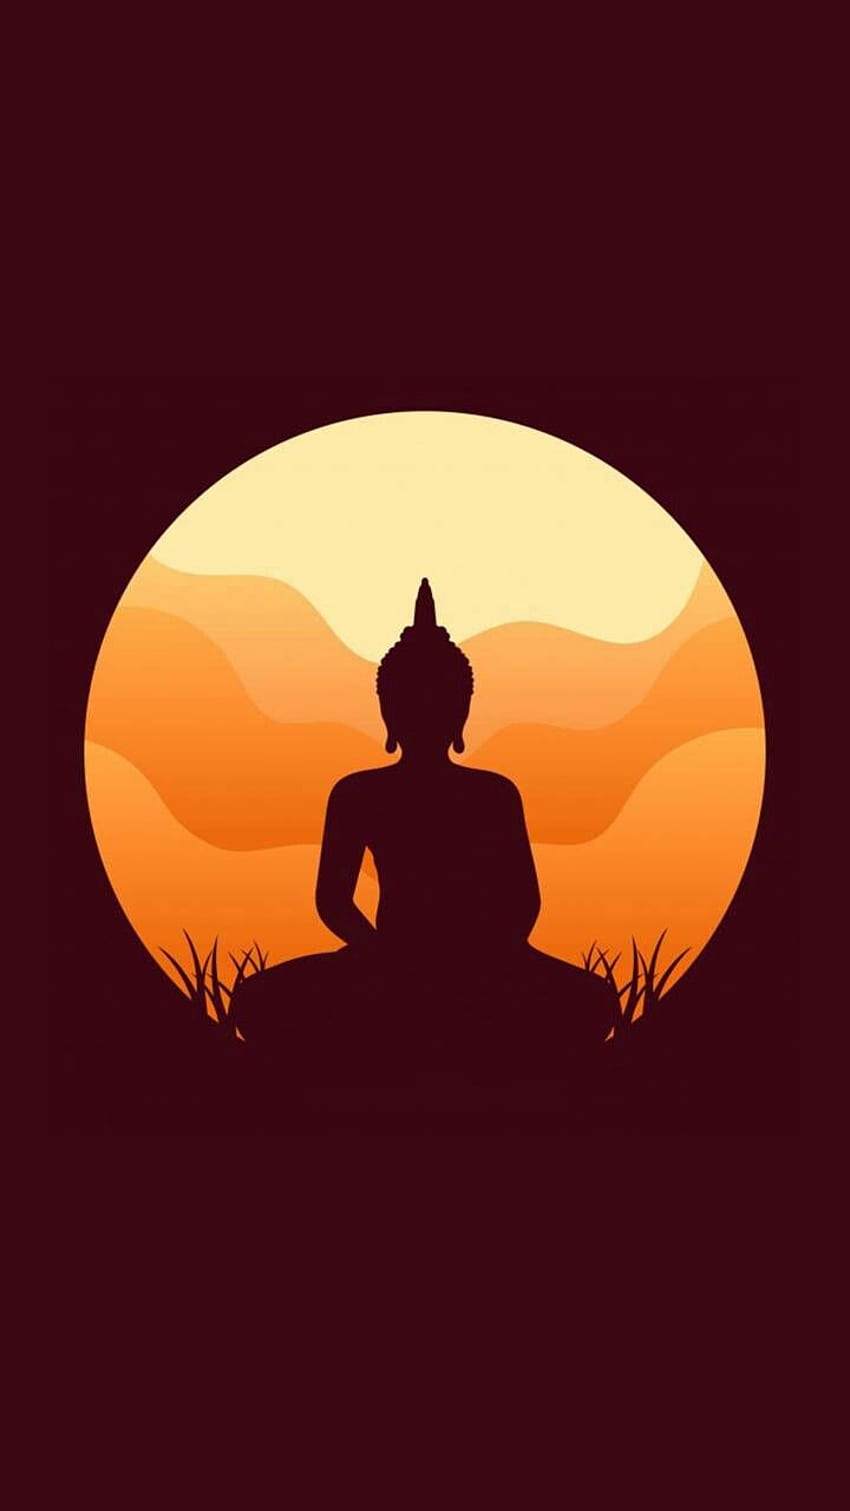 The Rebirth of Buddha | Japanese Animation | Hindi Dubbed 『仏陀再誕』 - YouTube